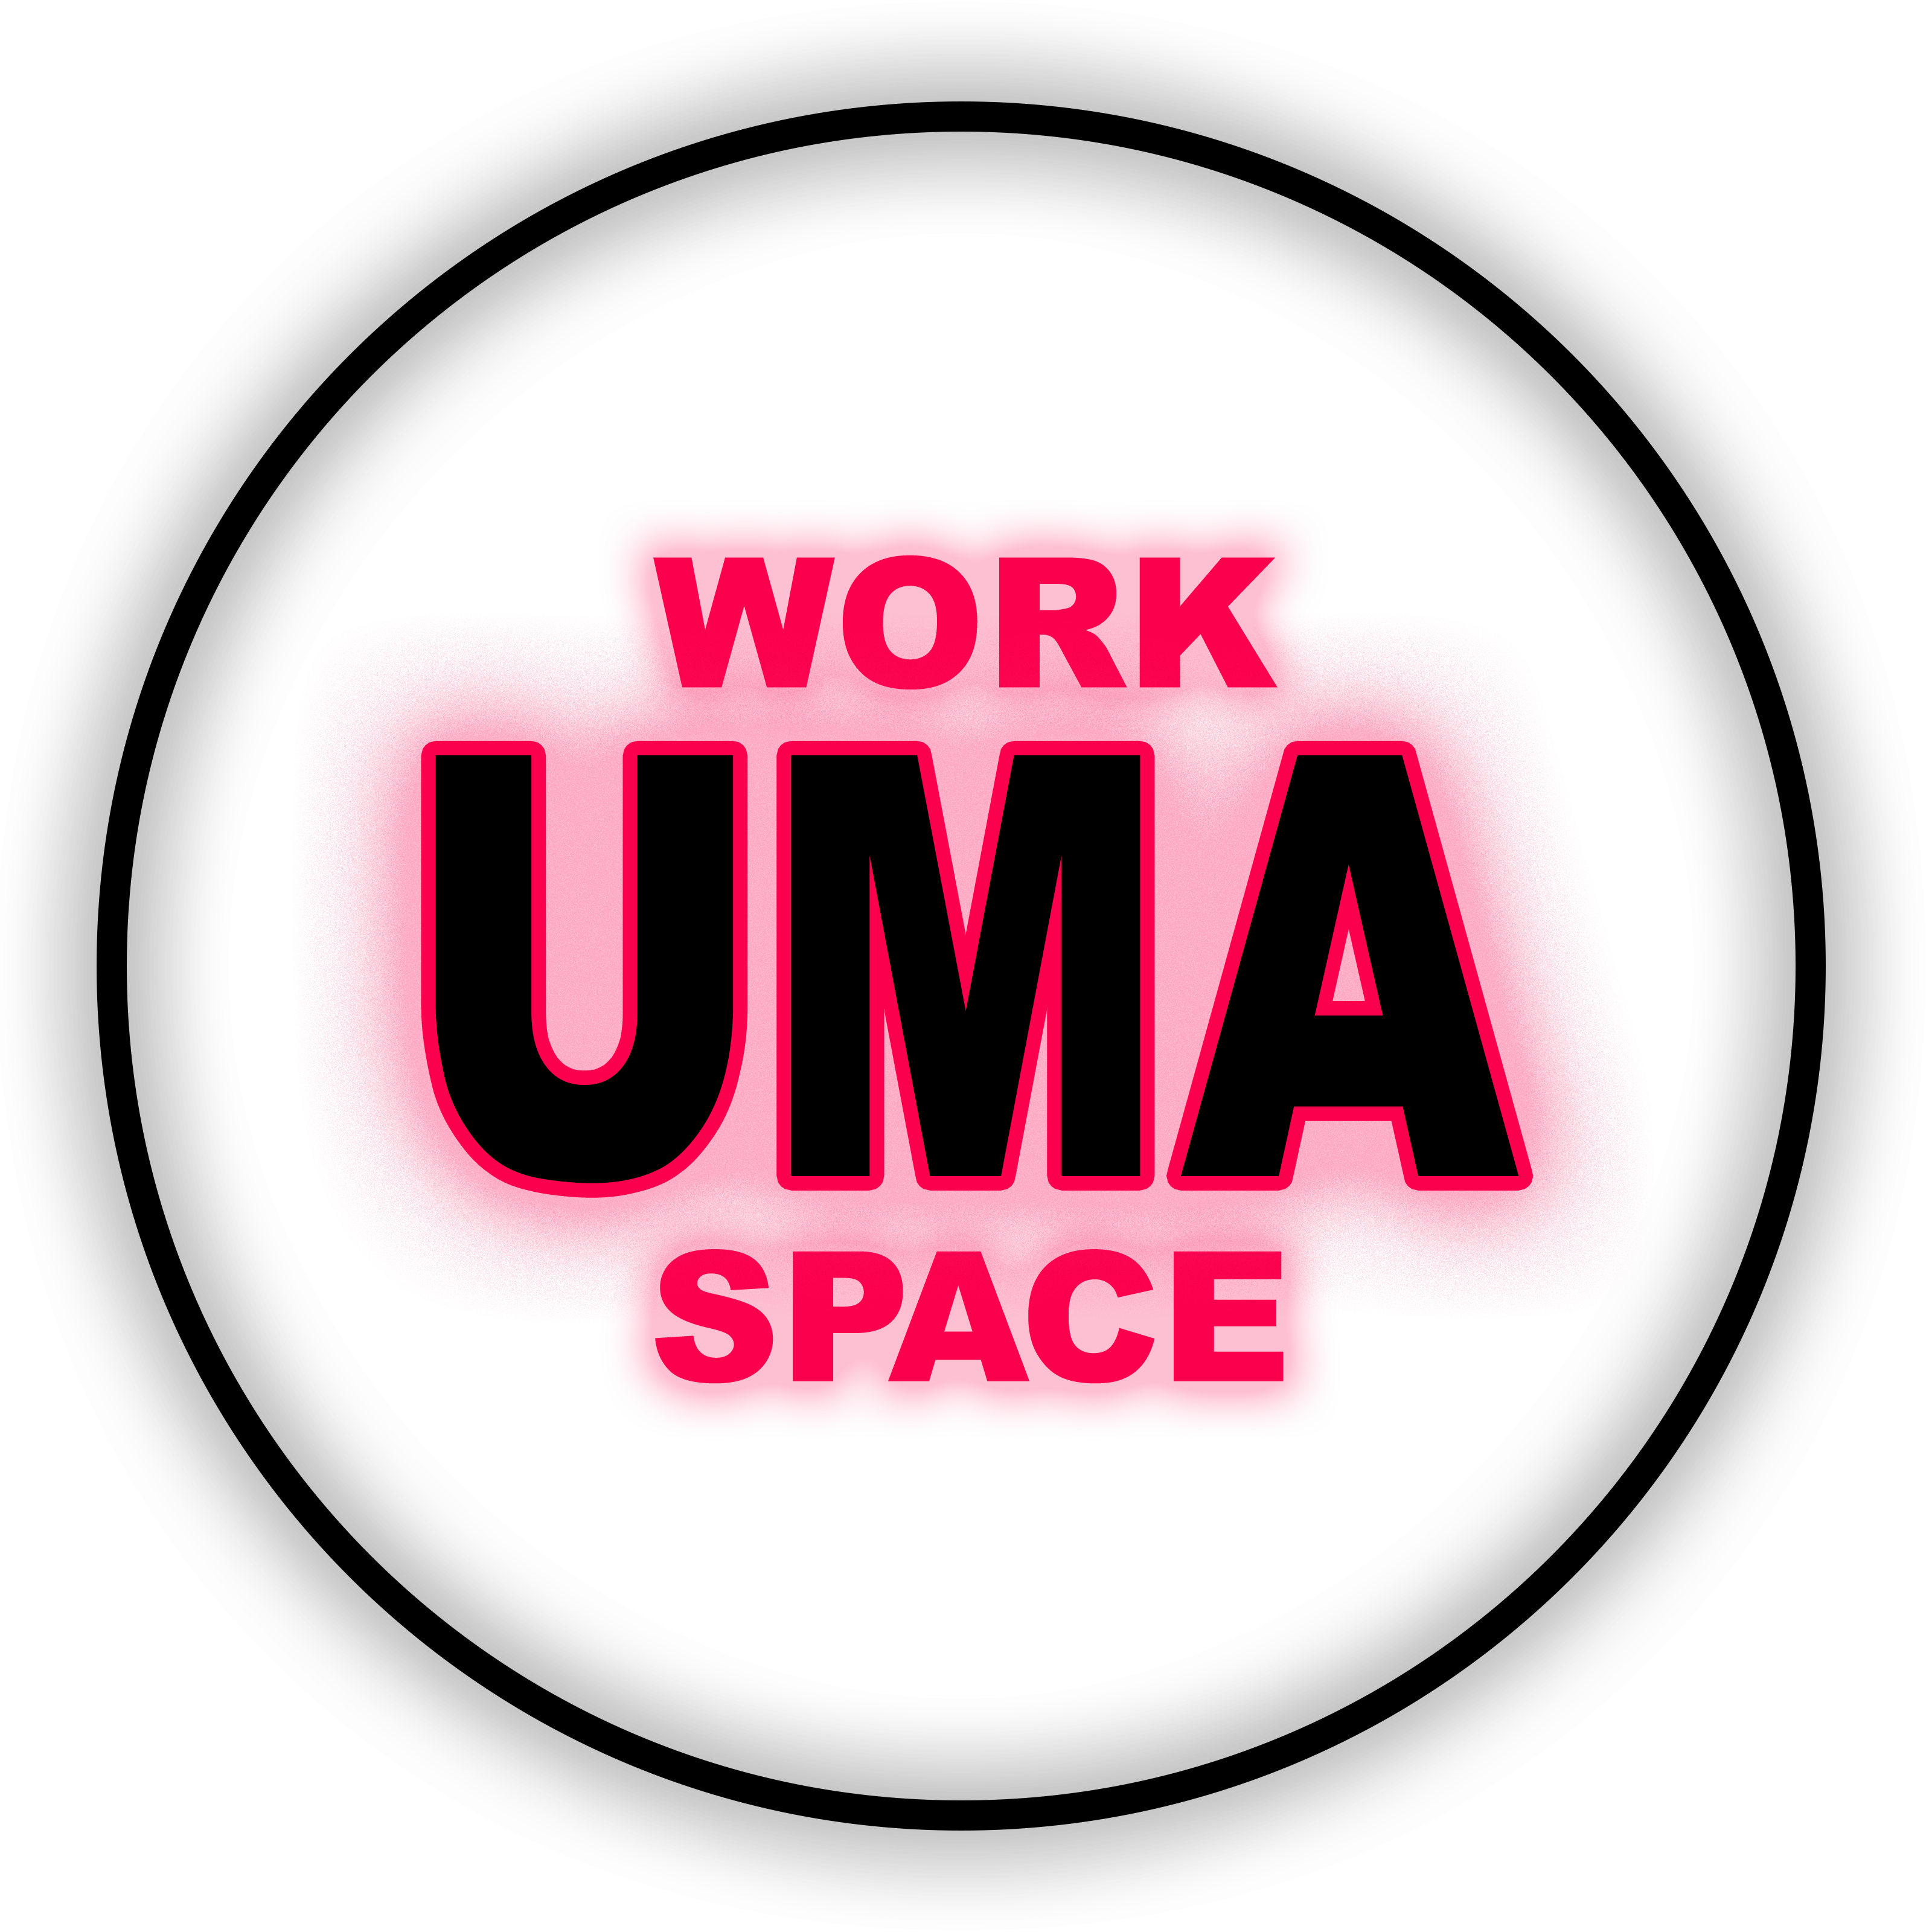 UMA Workspace